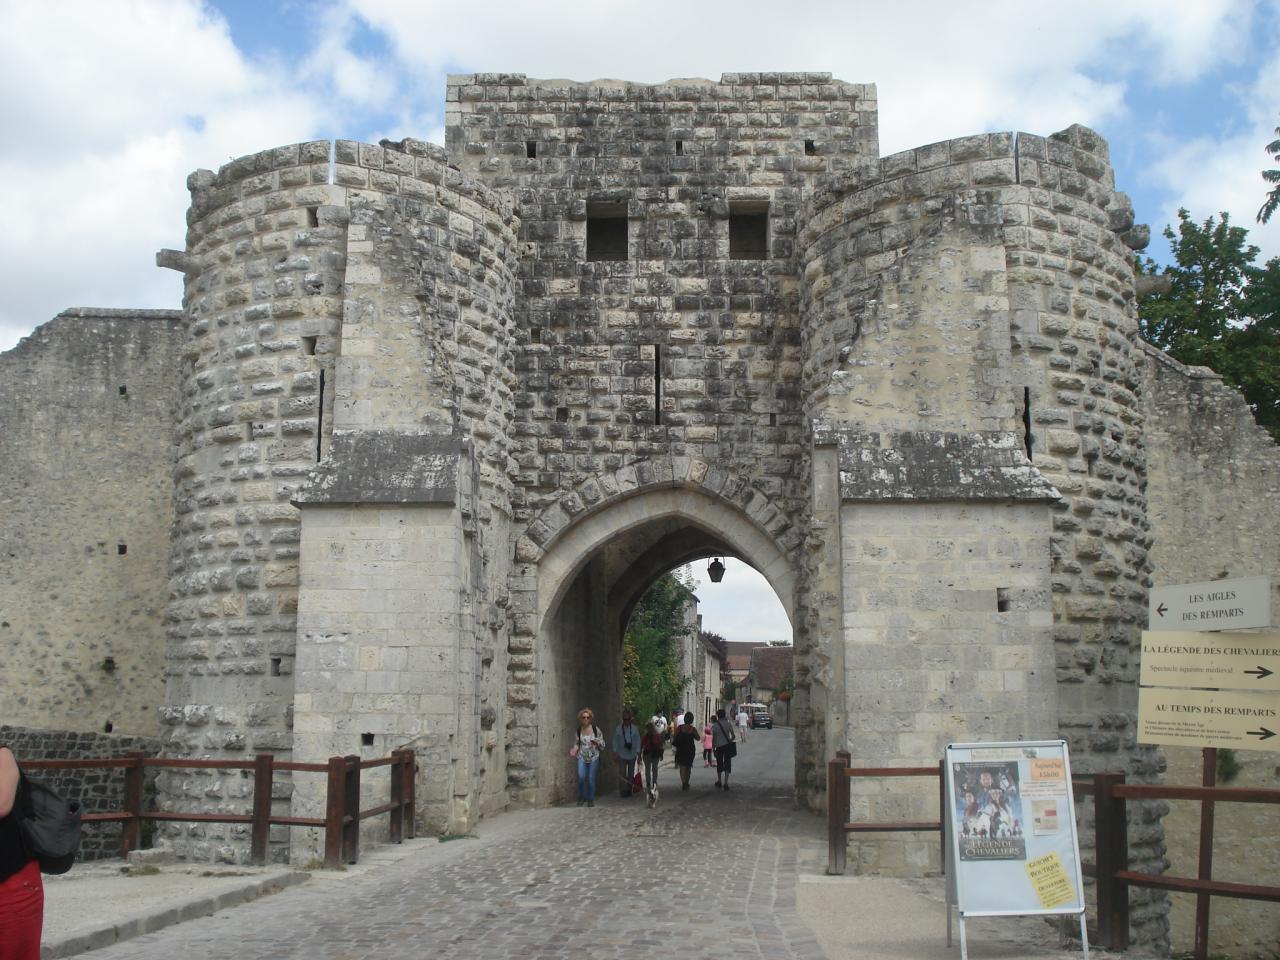 Porte Saint Jean